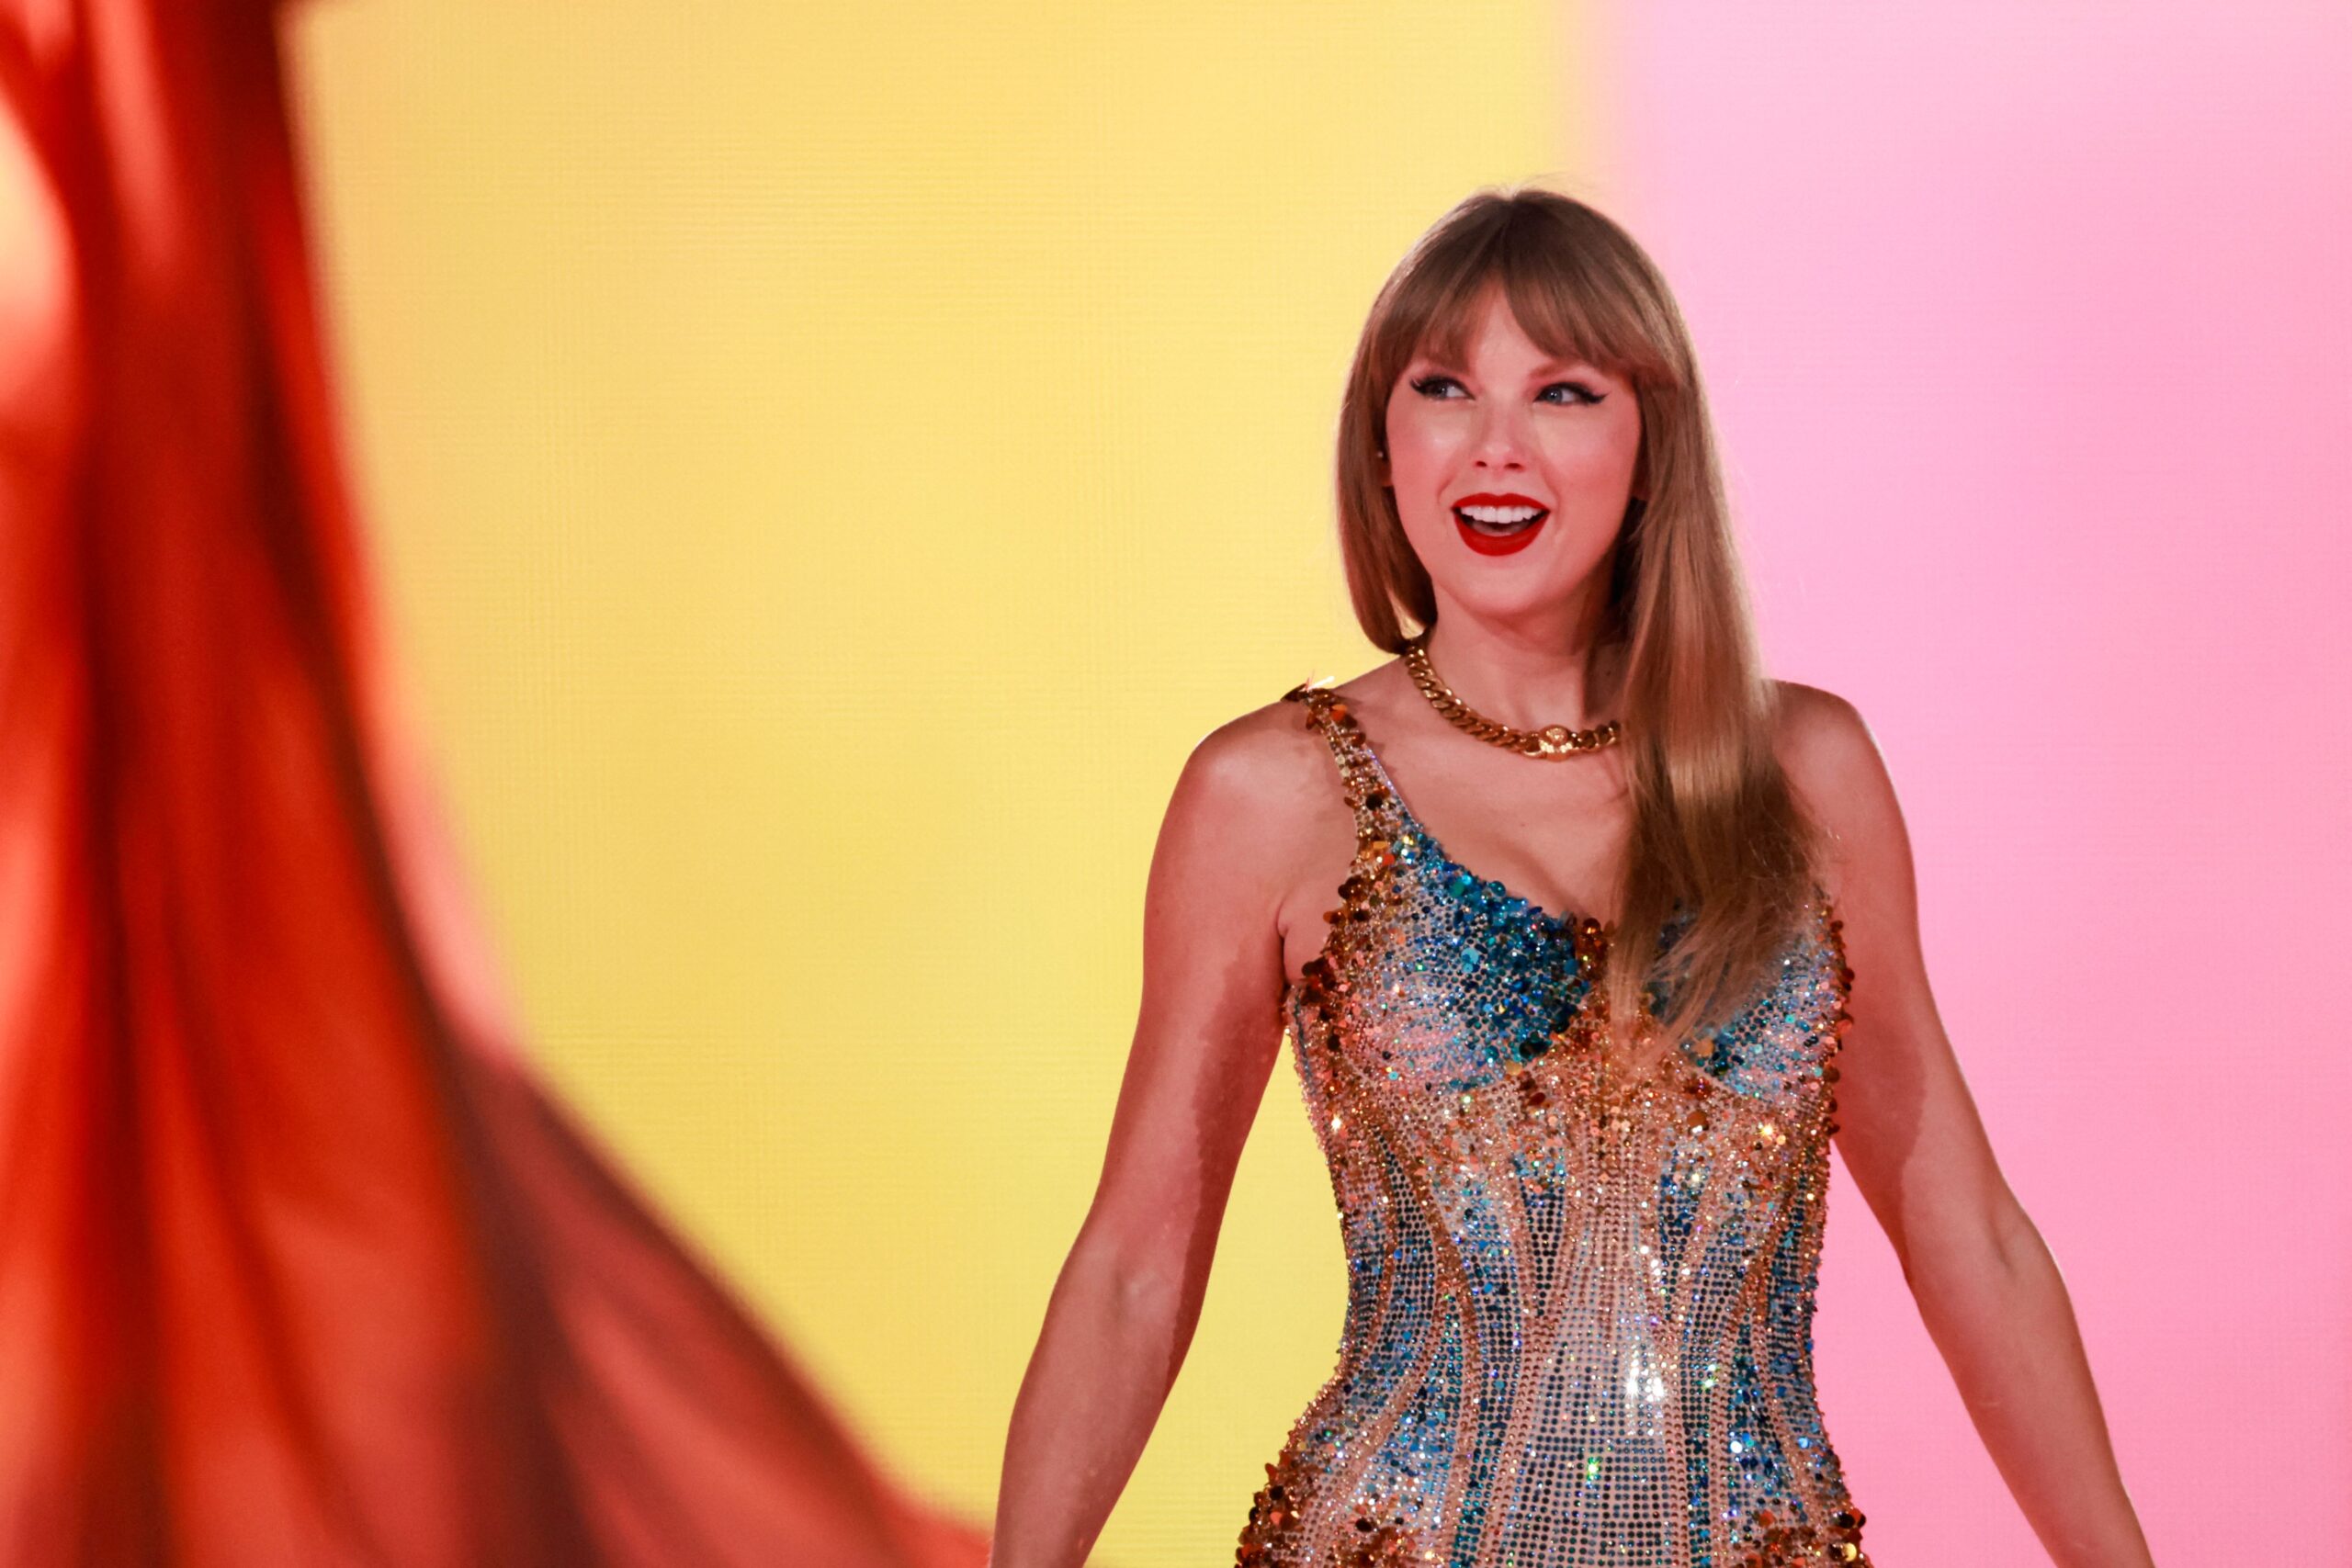 Taylor Swift's Music Returns to TikTok Amid UMG Licensing Dispute